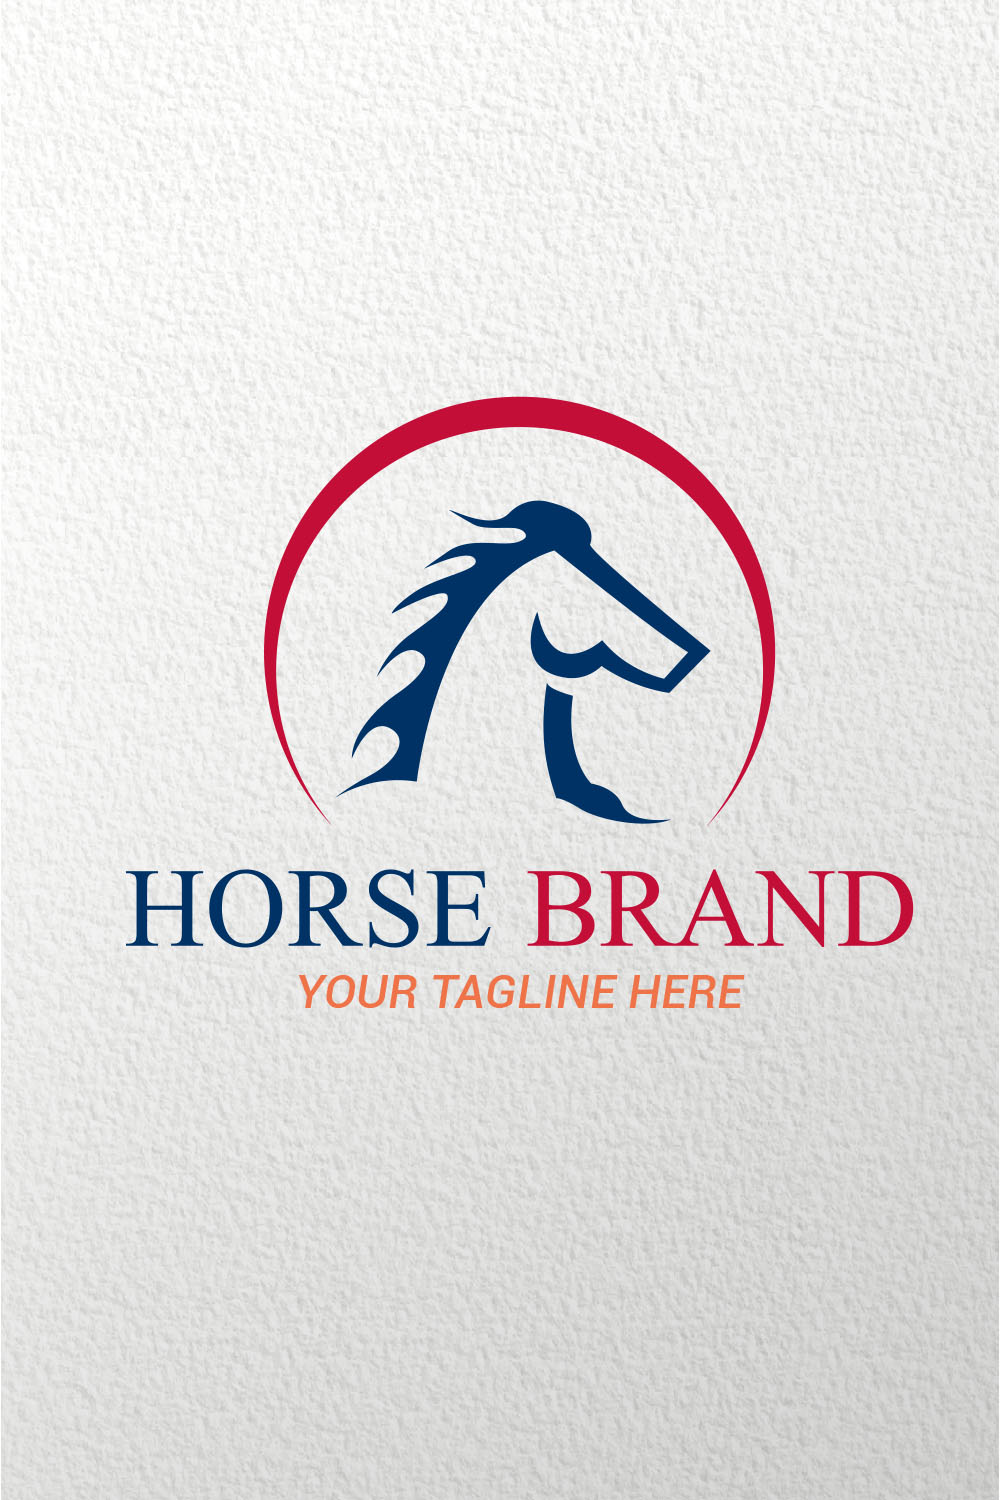 Horse brand logo design pinterest preview image.